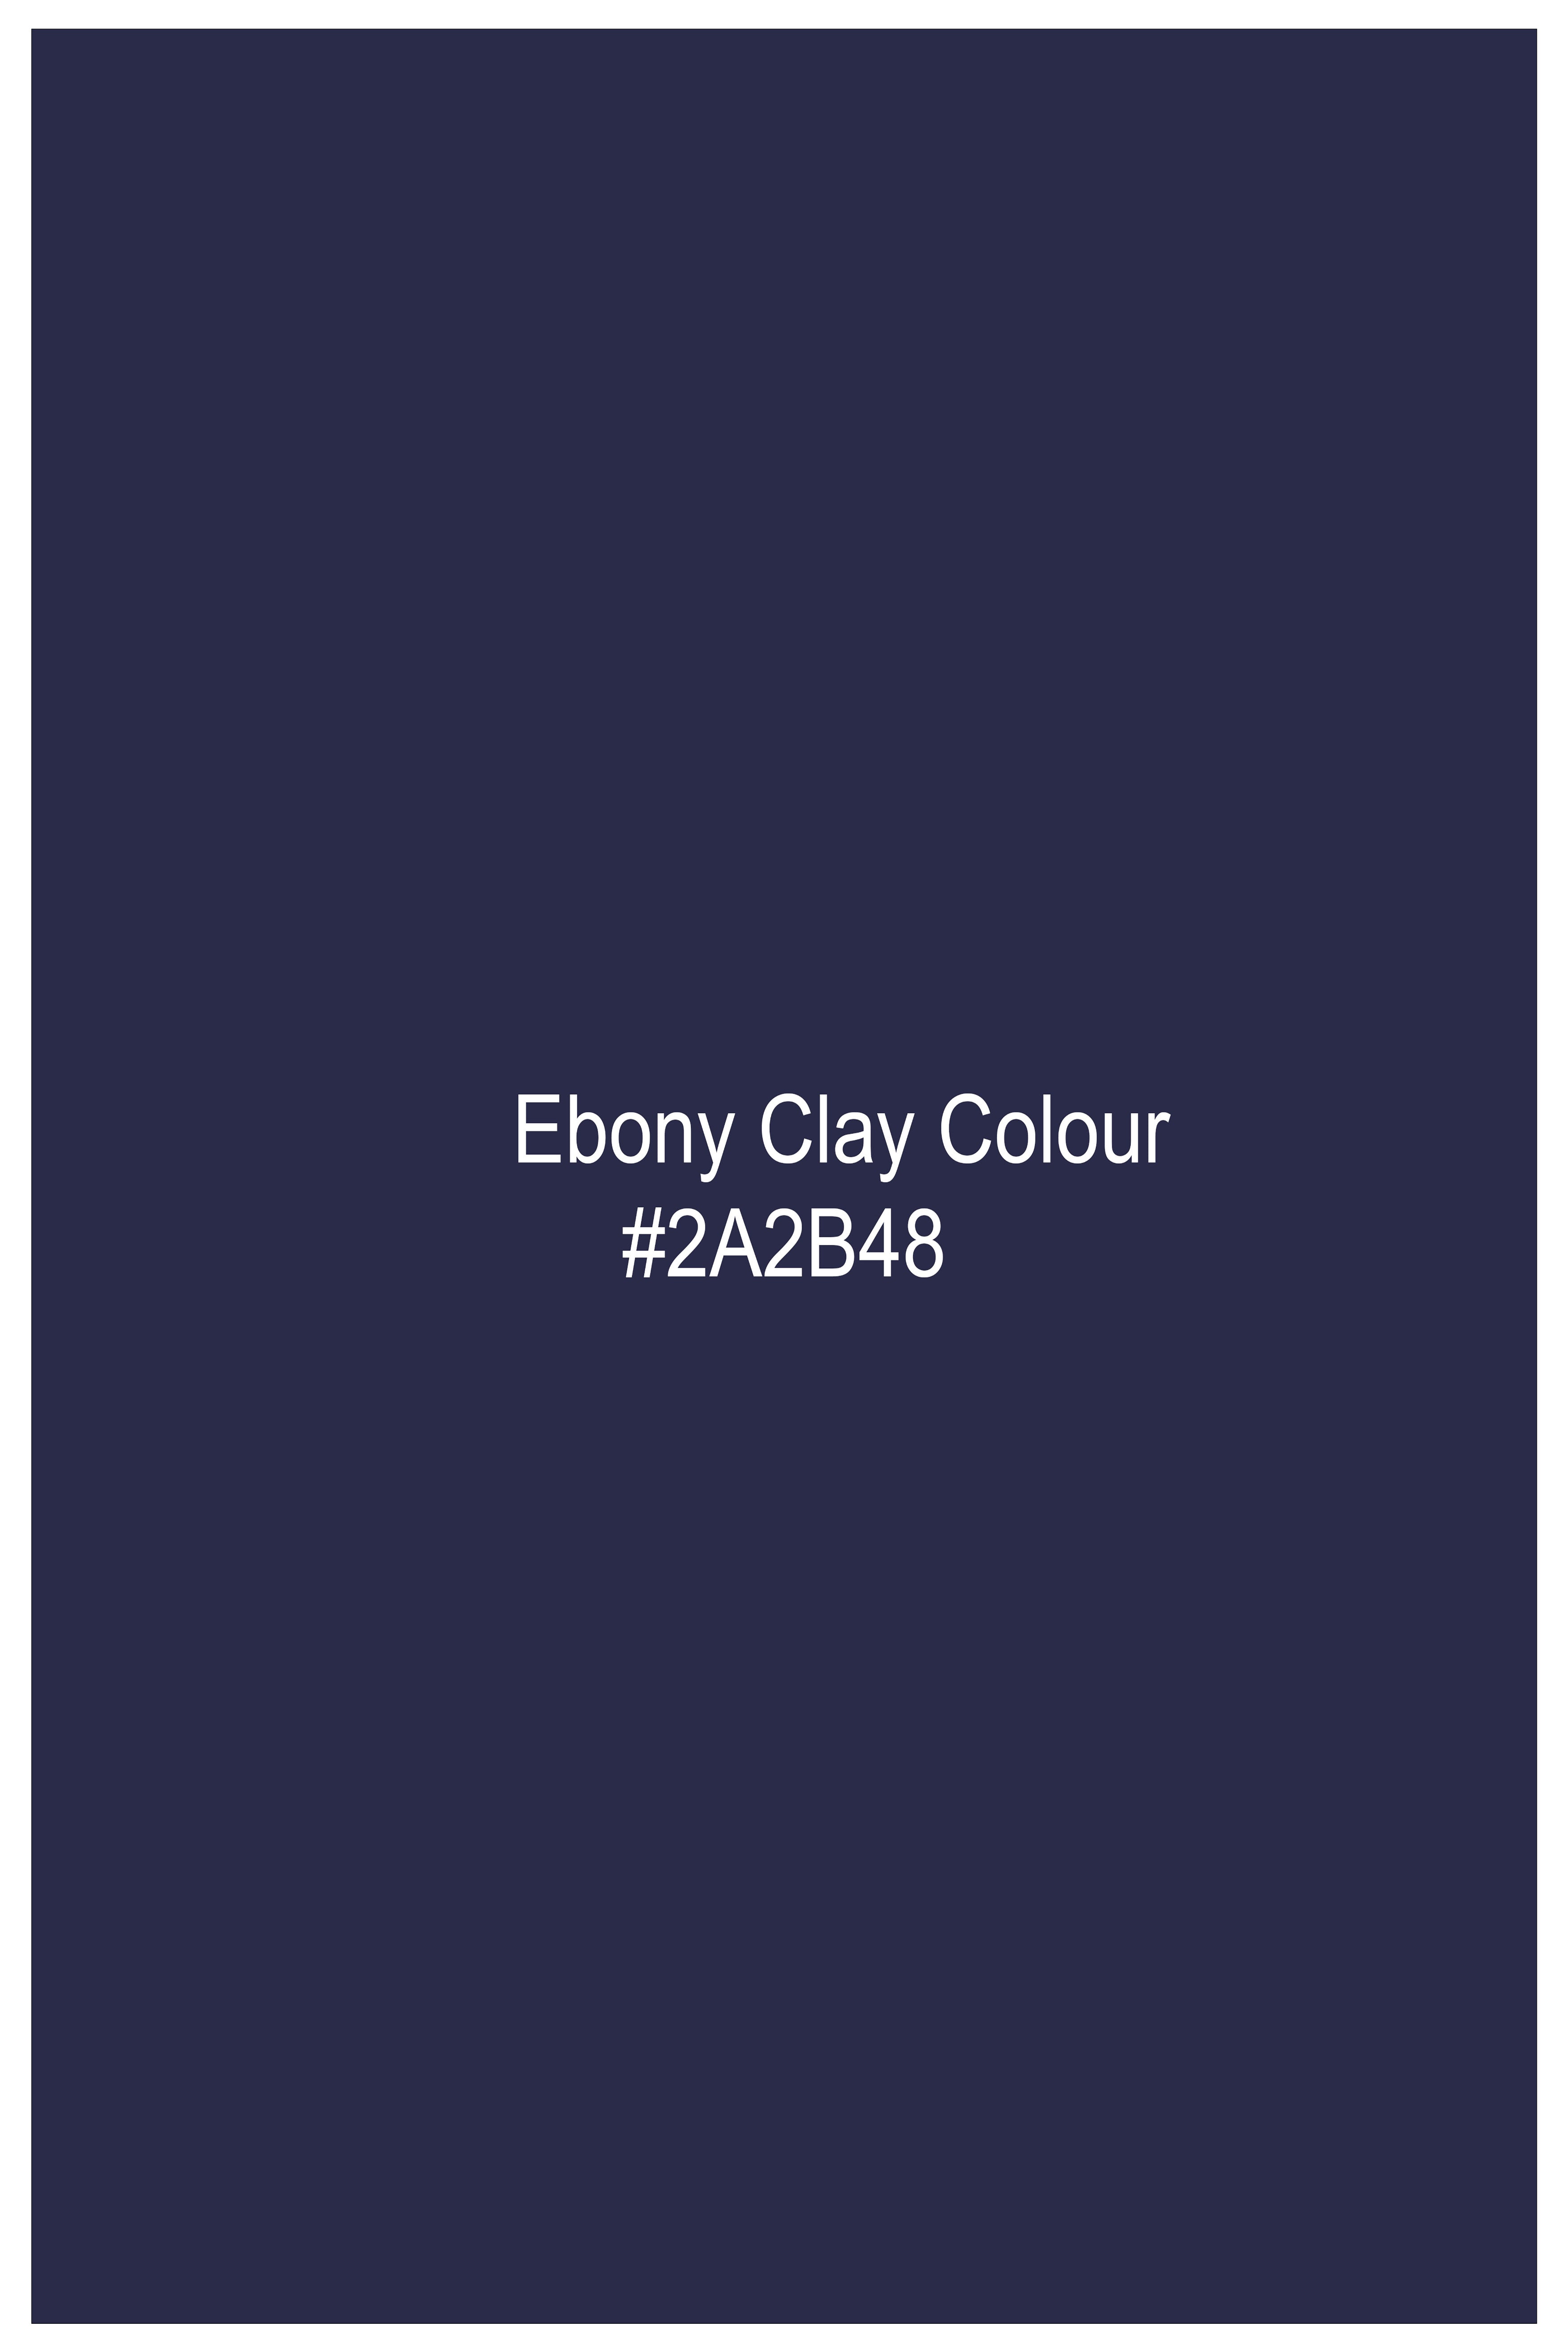 Ebony Clay Blue Luxurious Linen Shirt 10155-BD-38, 10155-BD-H-38, 10155-BD-39, 10155-BD-H-39, 10155-BD-40, 10155-BD-H-40, 10155-BD-42, 10155-BD-H-42, 10155-BD-44, 10155-BD-H-44, 10155-BD-46, 10155-BD-H-46, 10155-BD-48, 10155-BD-H-48, 10155-BD-50, 10155-BD-H-50, 10155-BD-52, 10155-BD-H-52